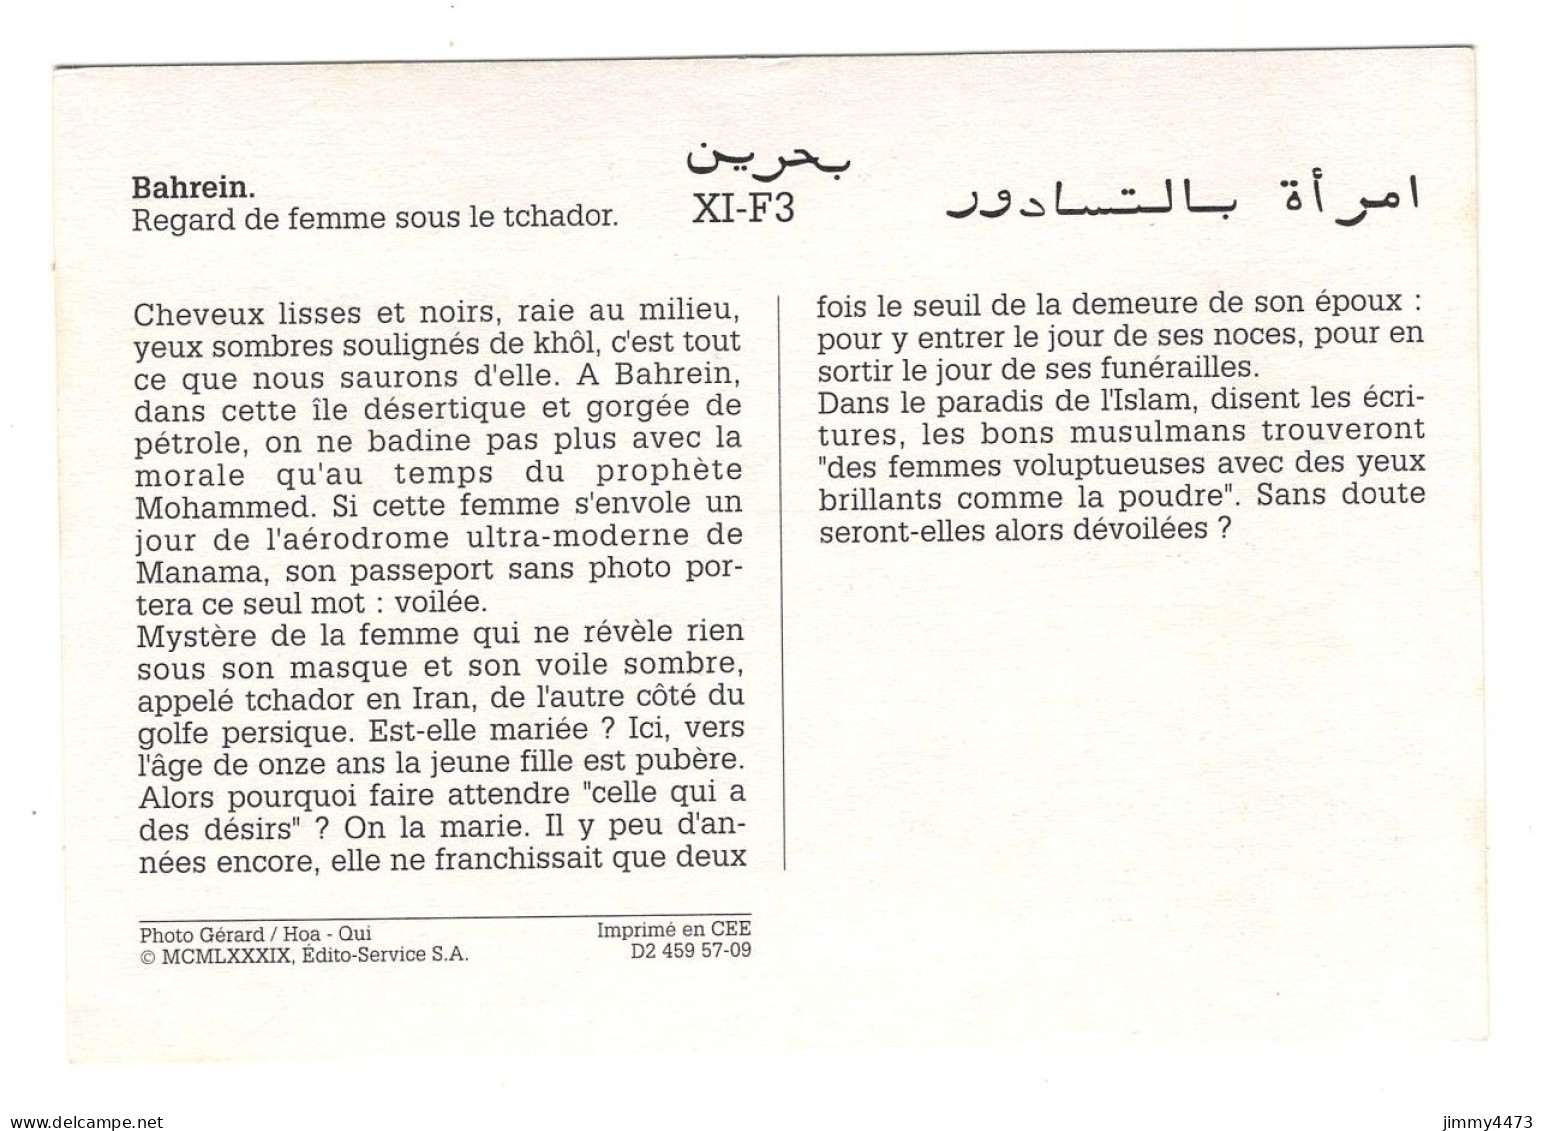 BAHREIN - Regard De Femme Sous Le Tchador ( Texte Au Dos ) XI-F3 - Photo Gérard / Hoa - Qui - Bahrain